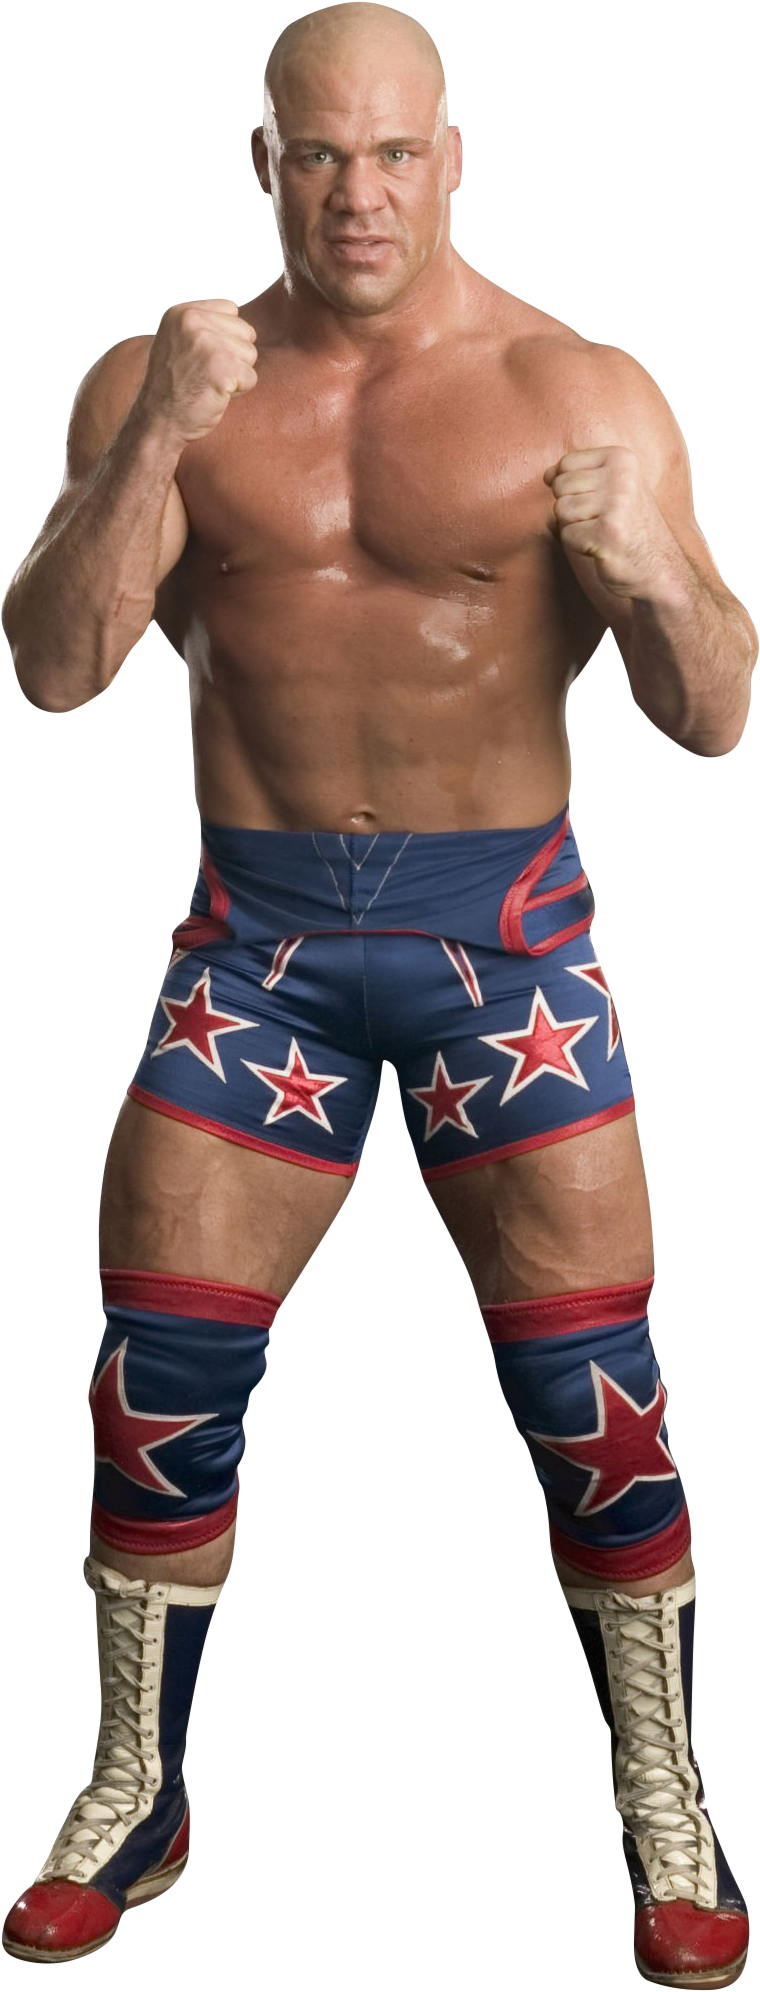 Image Kurt Angle Png Pro Wrestling Wiki Divas Knockouts